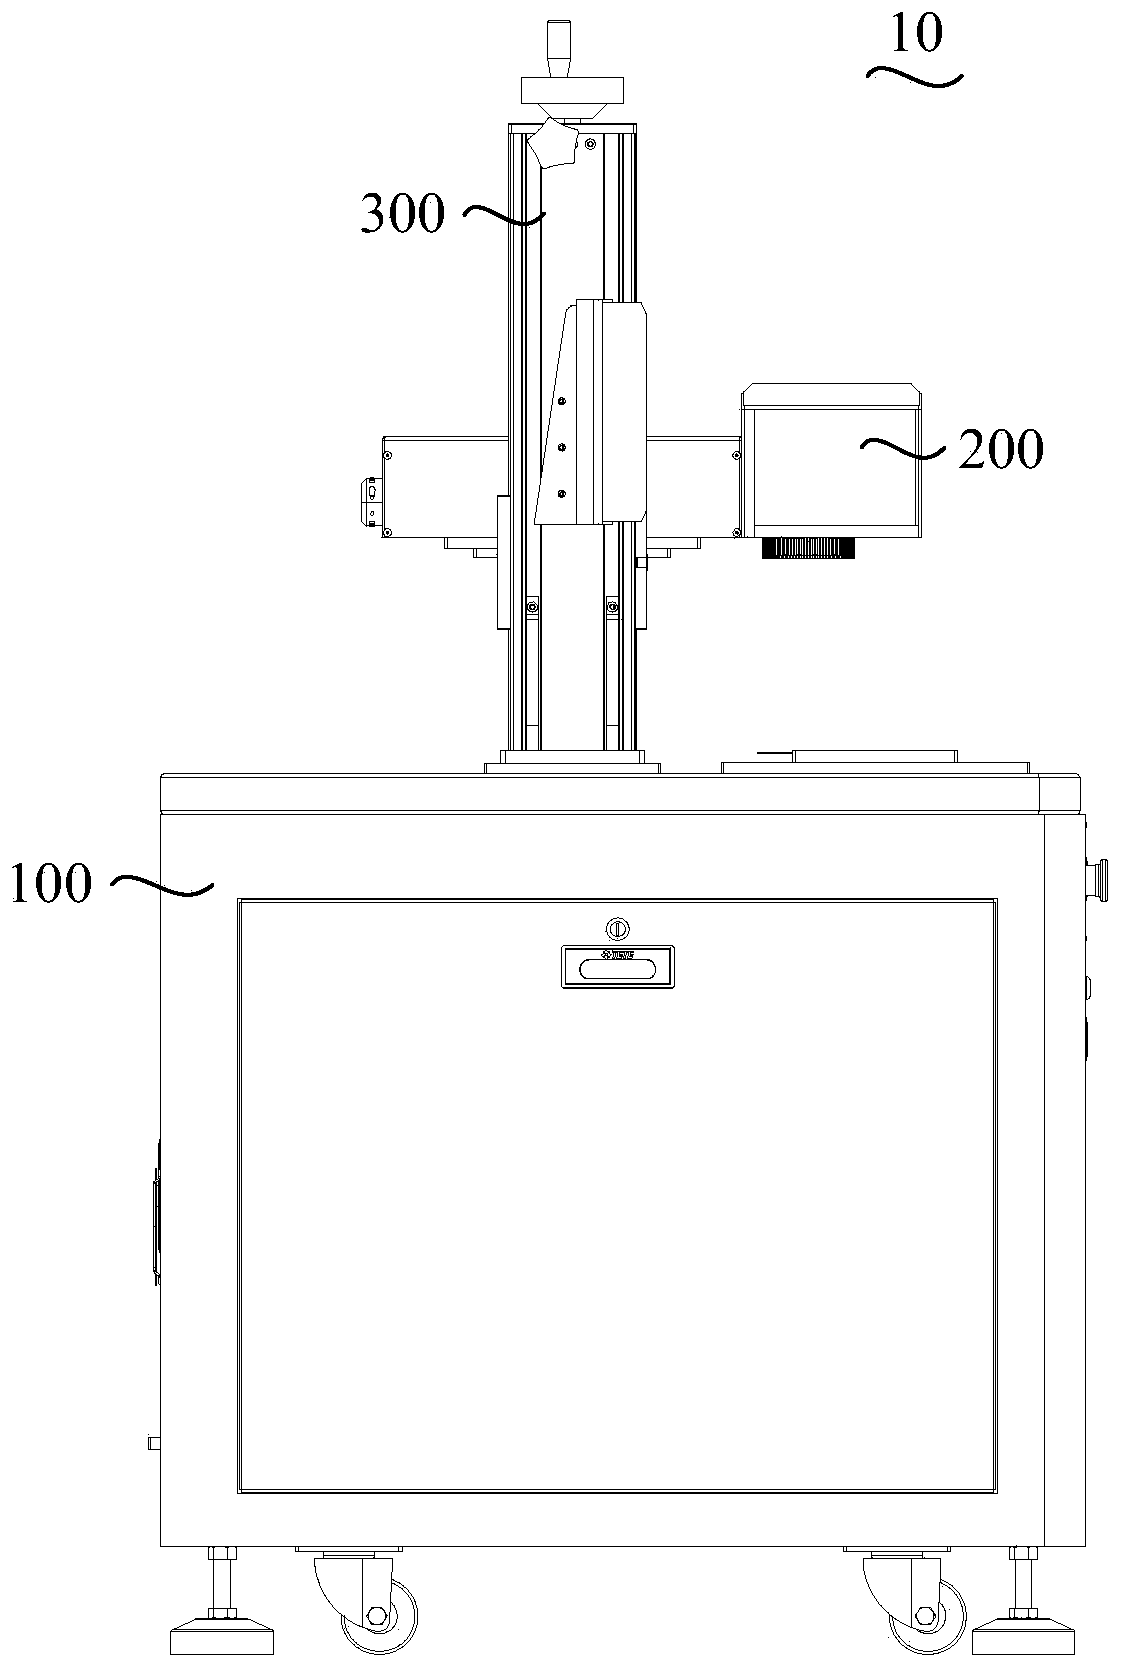 Laser marking method for anodic aluminum oxide surface